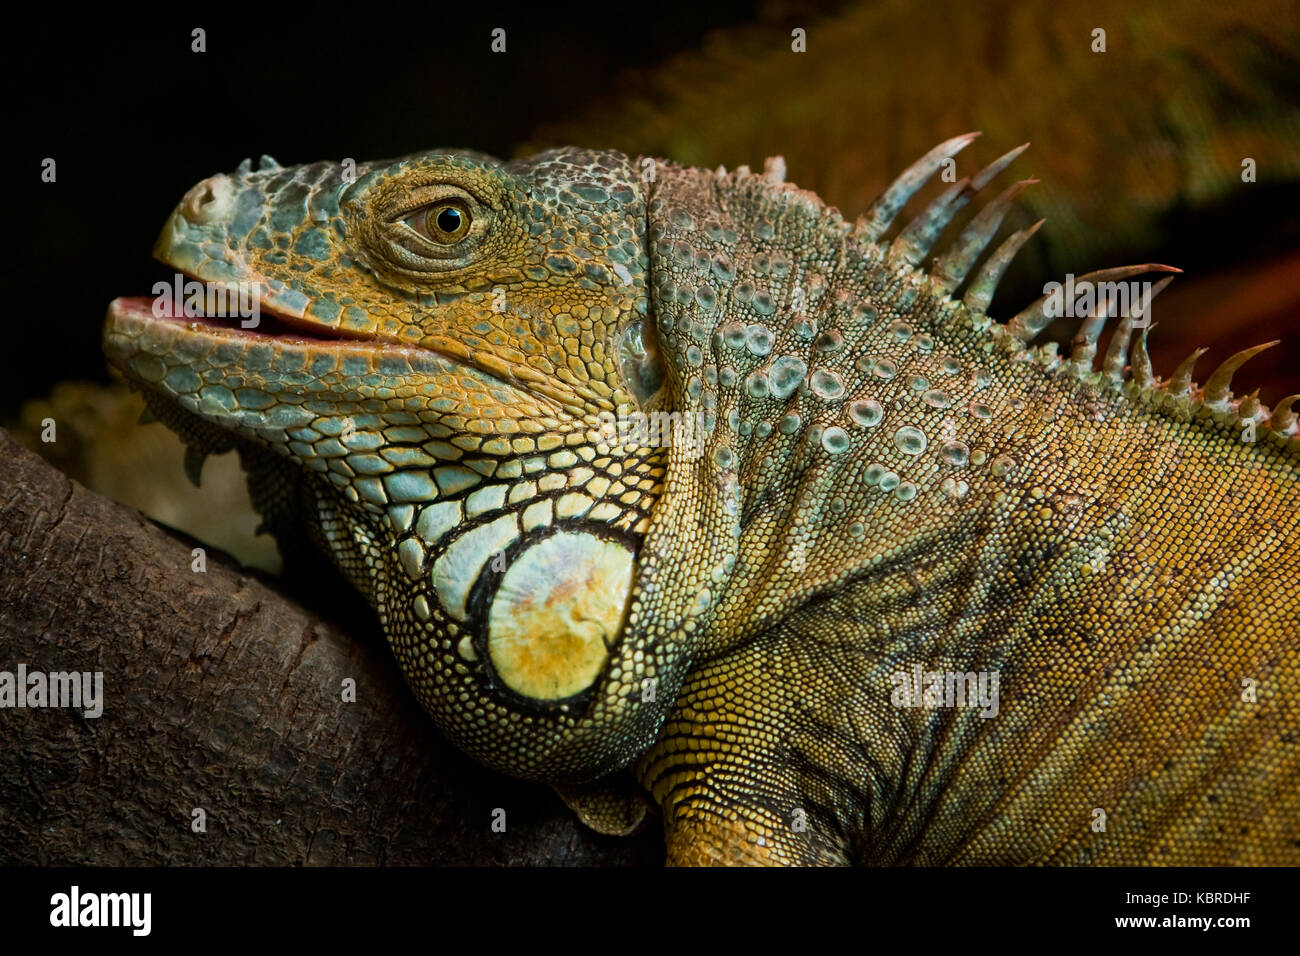 Iguana lizard in vivarium Stock Photo